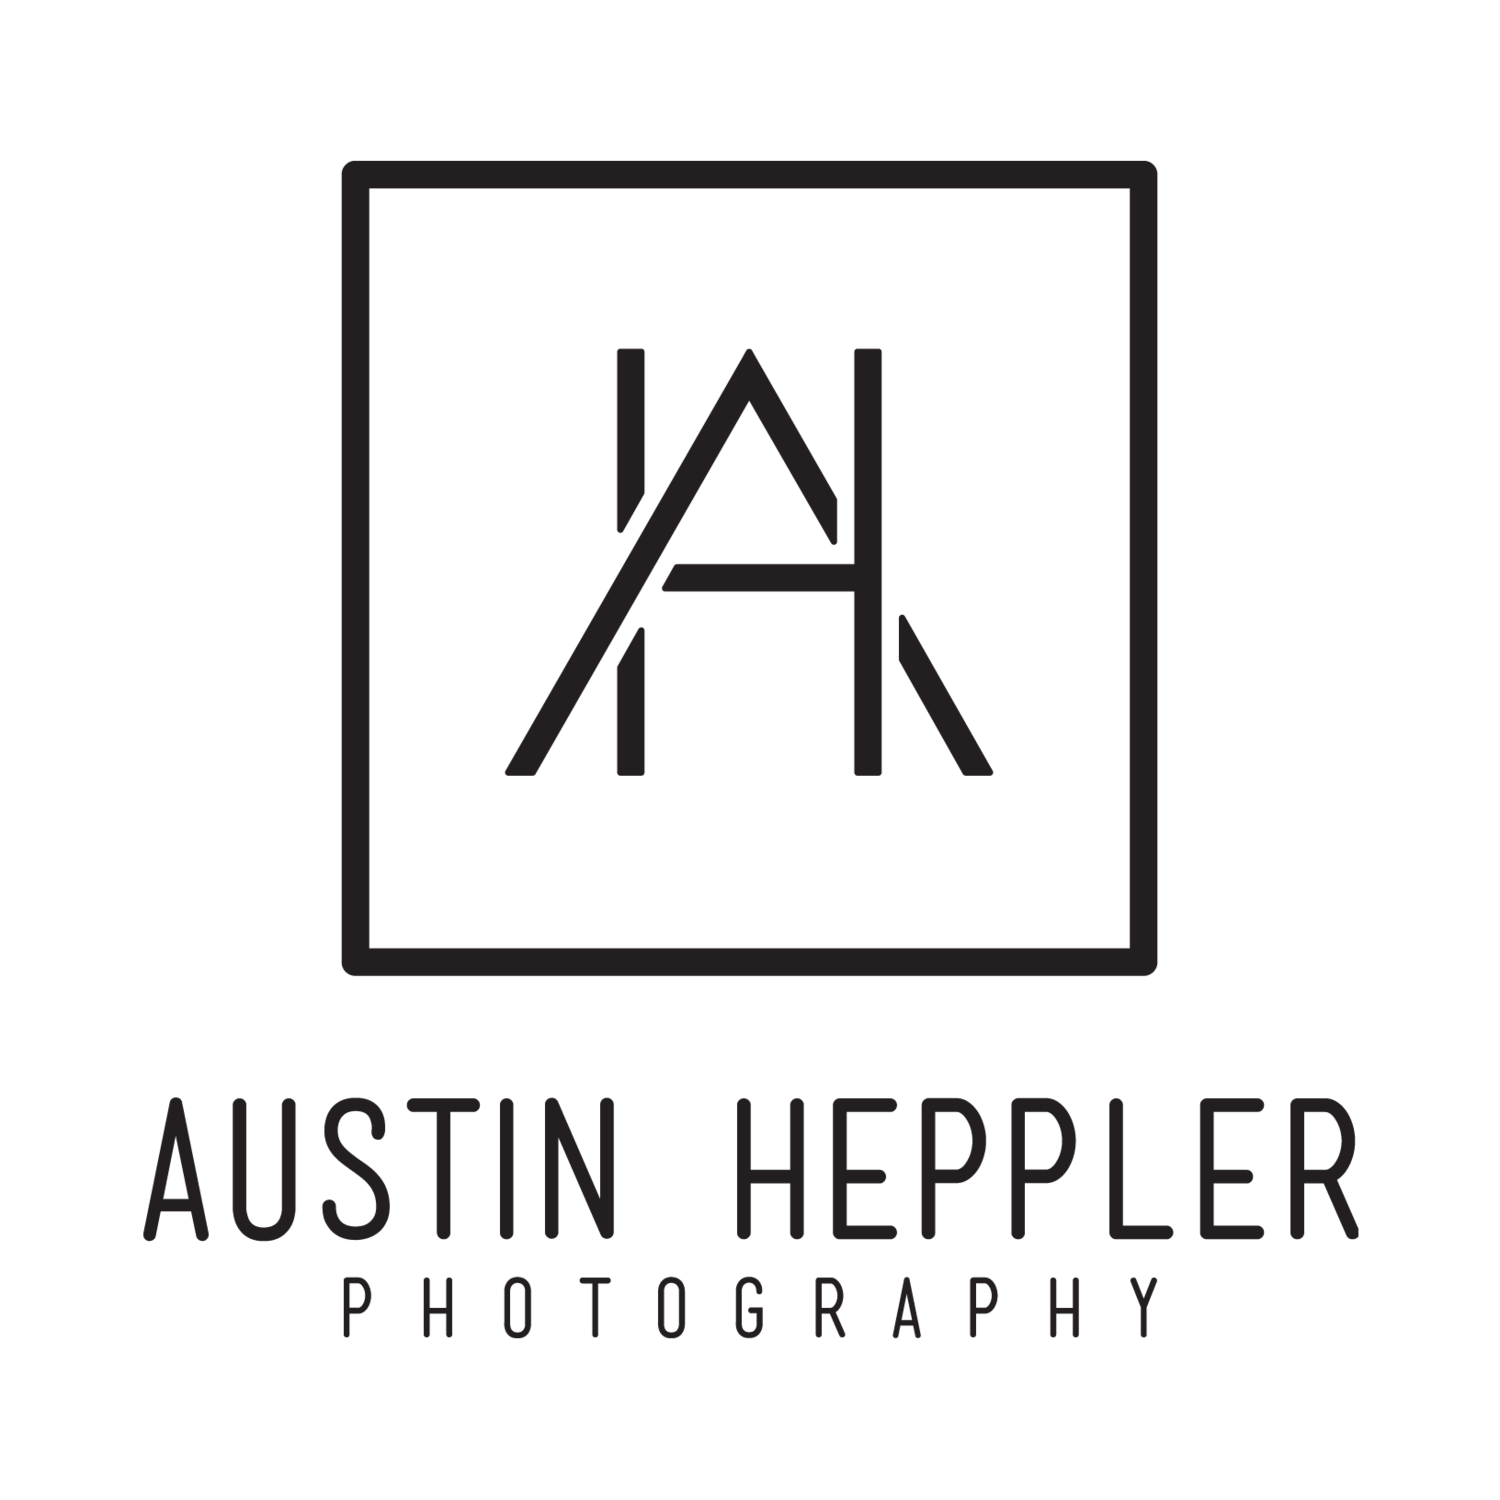 Austin Heppler Photography